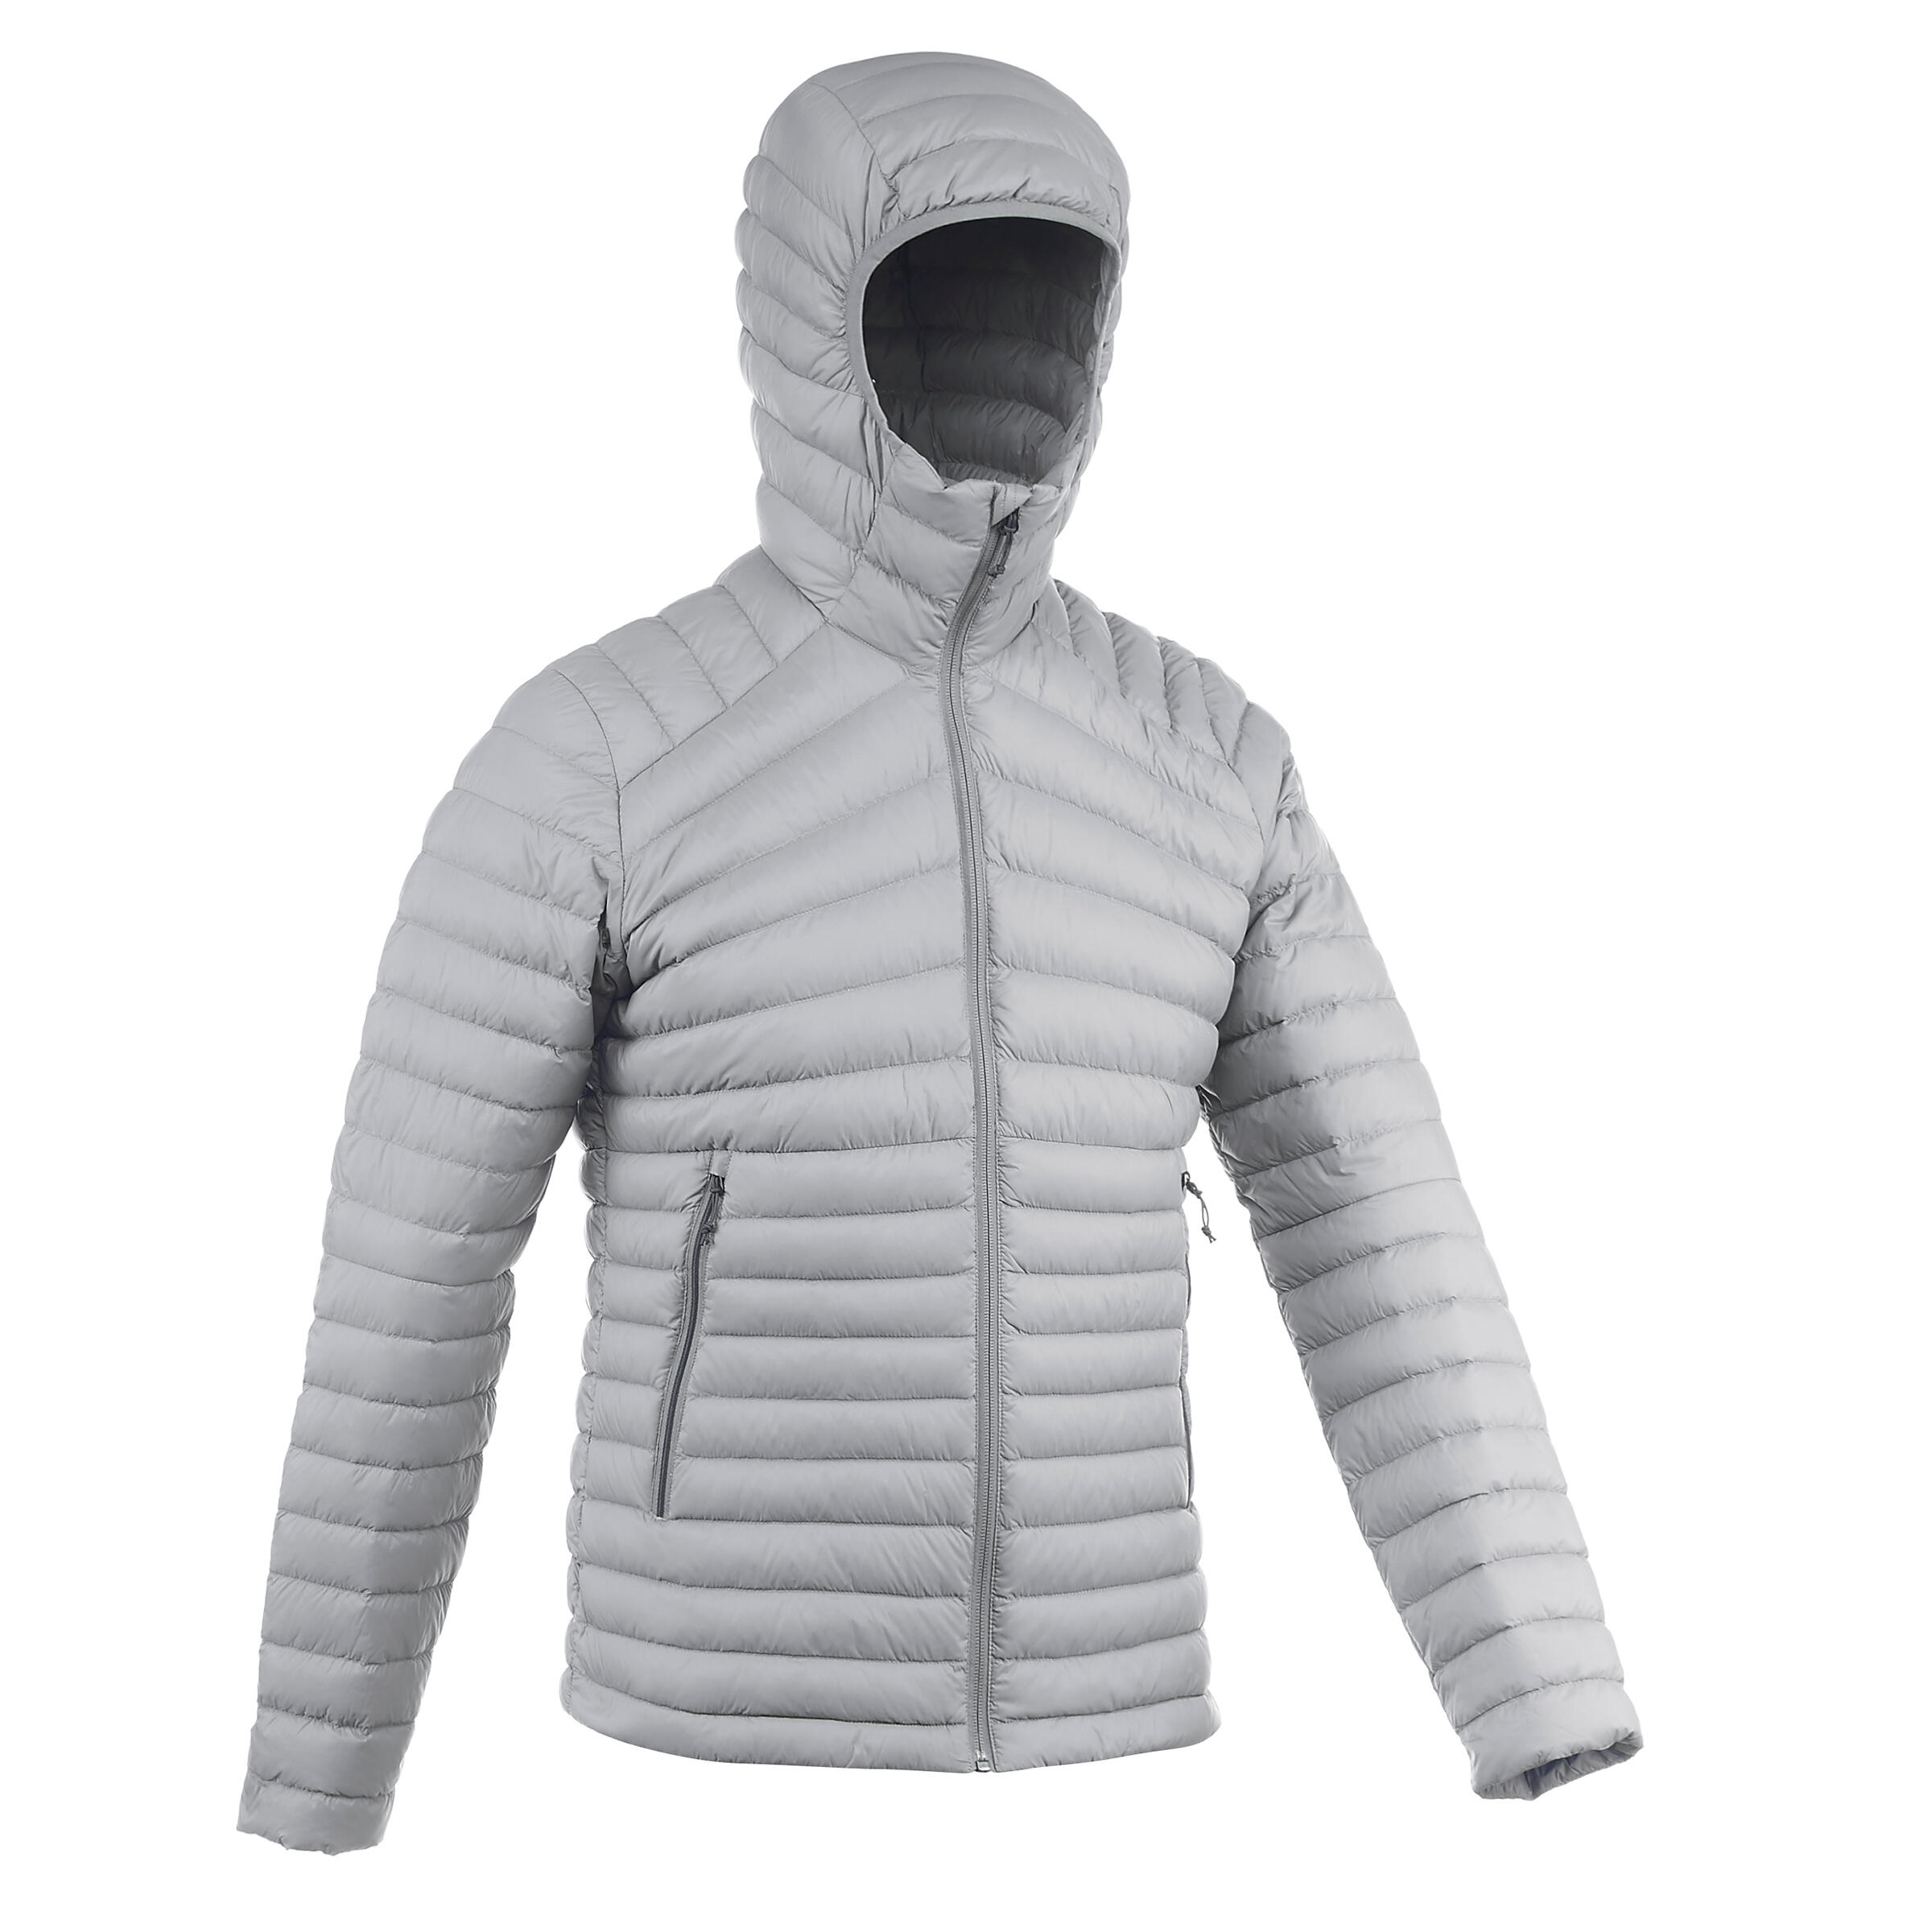 decathlon insulated jacket